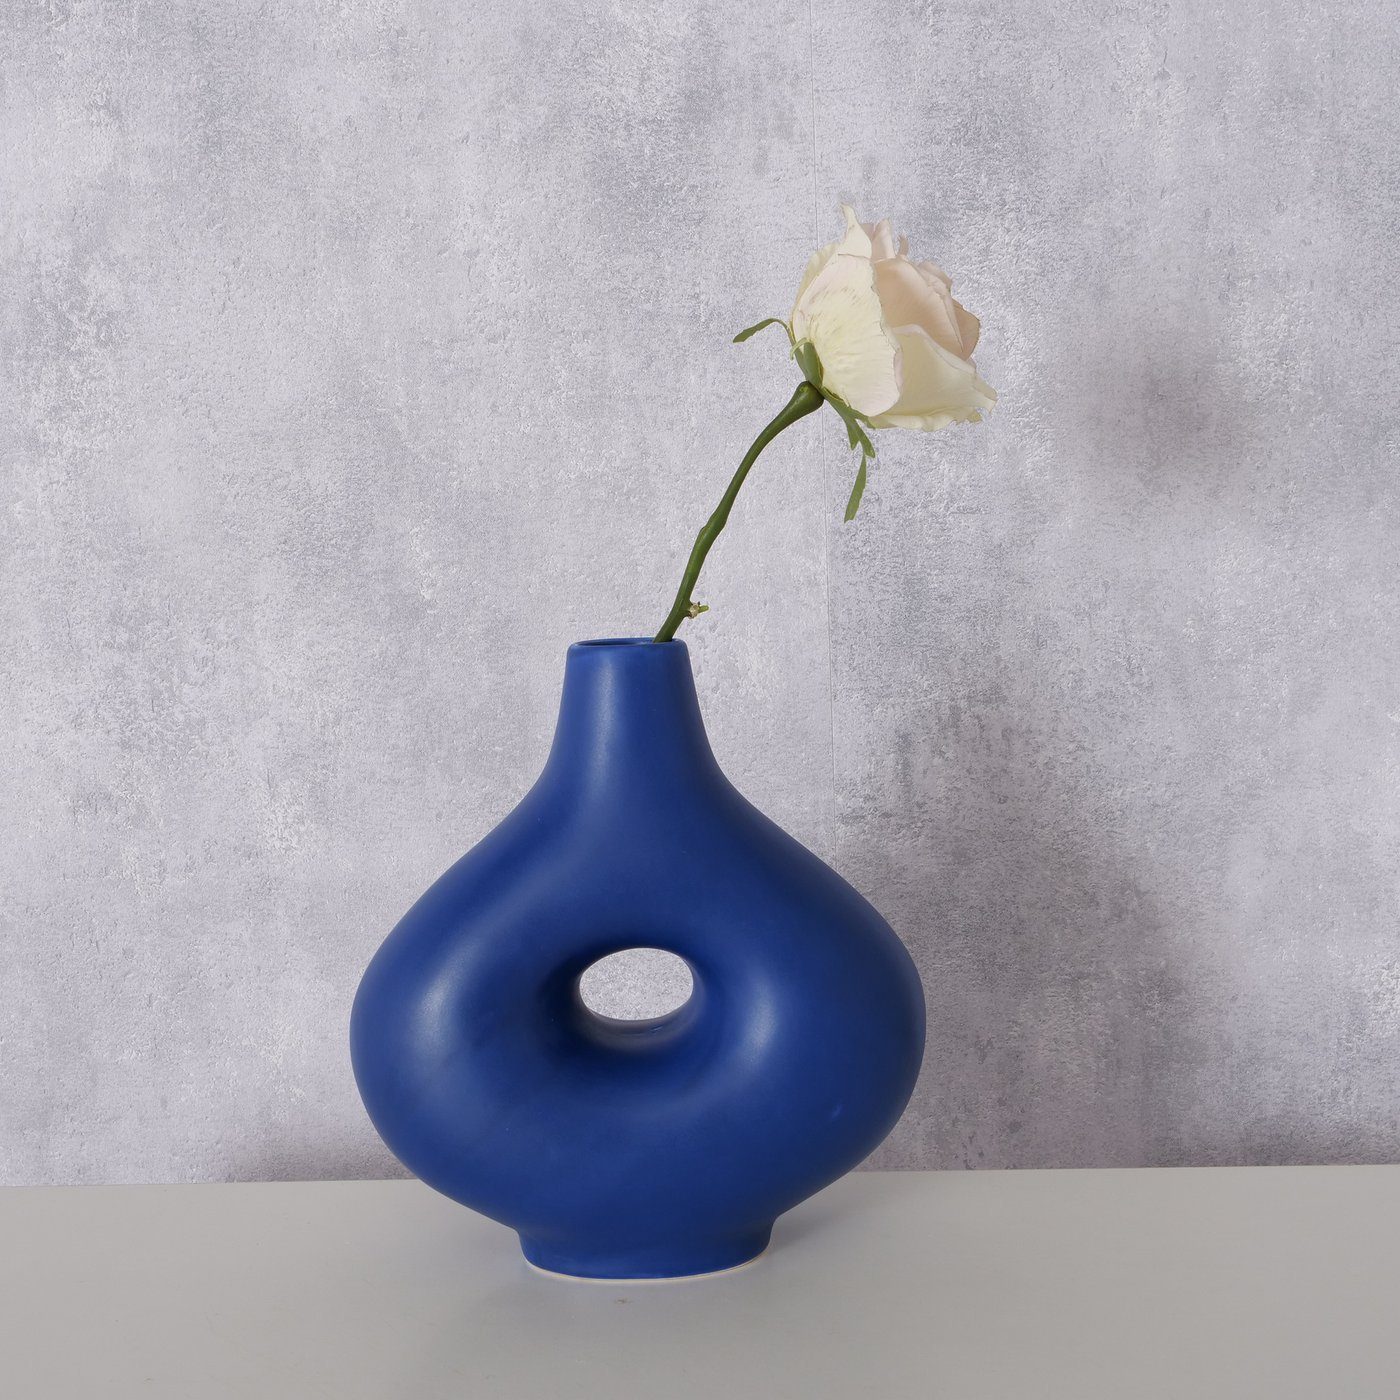 BOLTZE Dekovase "Abela" aus Keramik in blau H21cm, Vase